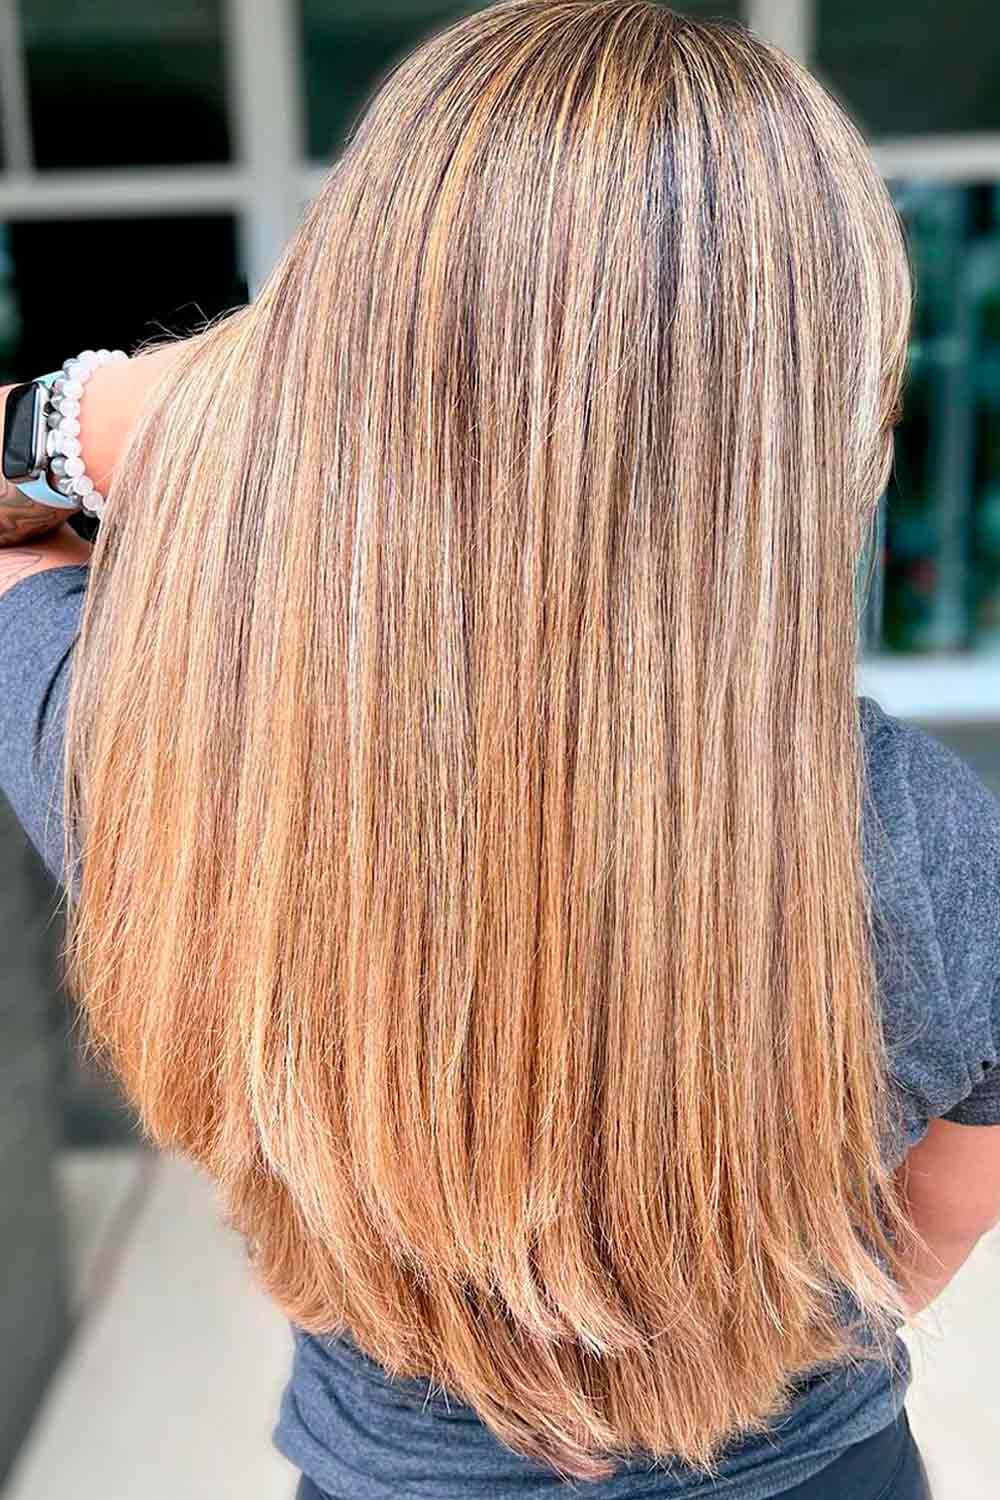 Long Blonde Layers Straight Hair #straighthair #straighthairstyle #straighthairideas